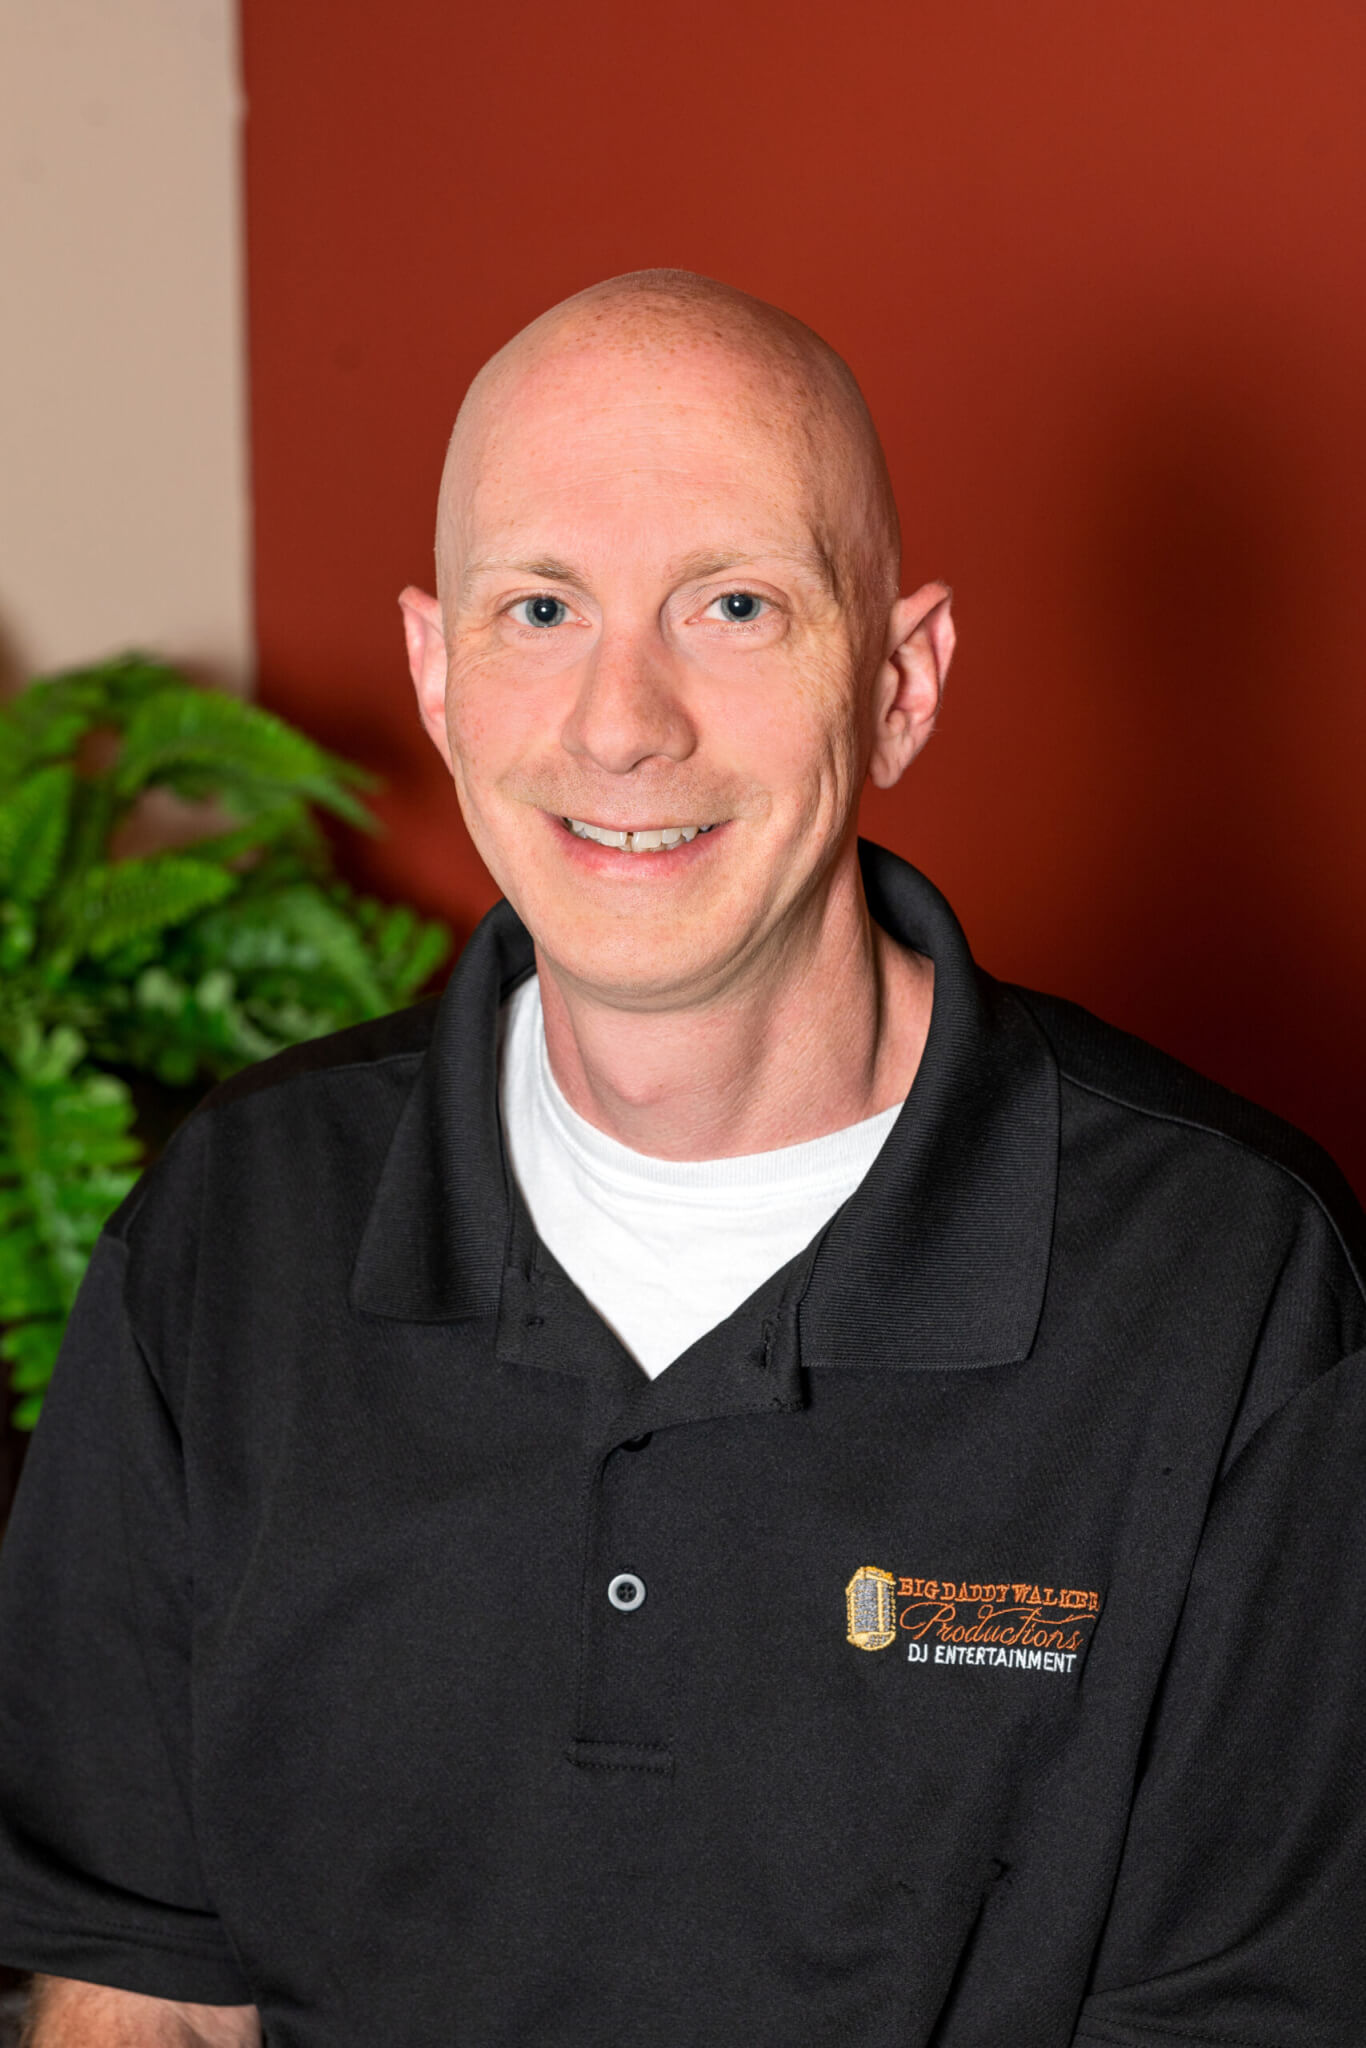 A bald man in a black shirt, serving as a Cincinnati DJ for weddings in the area.